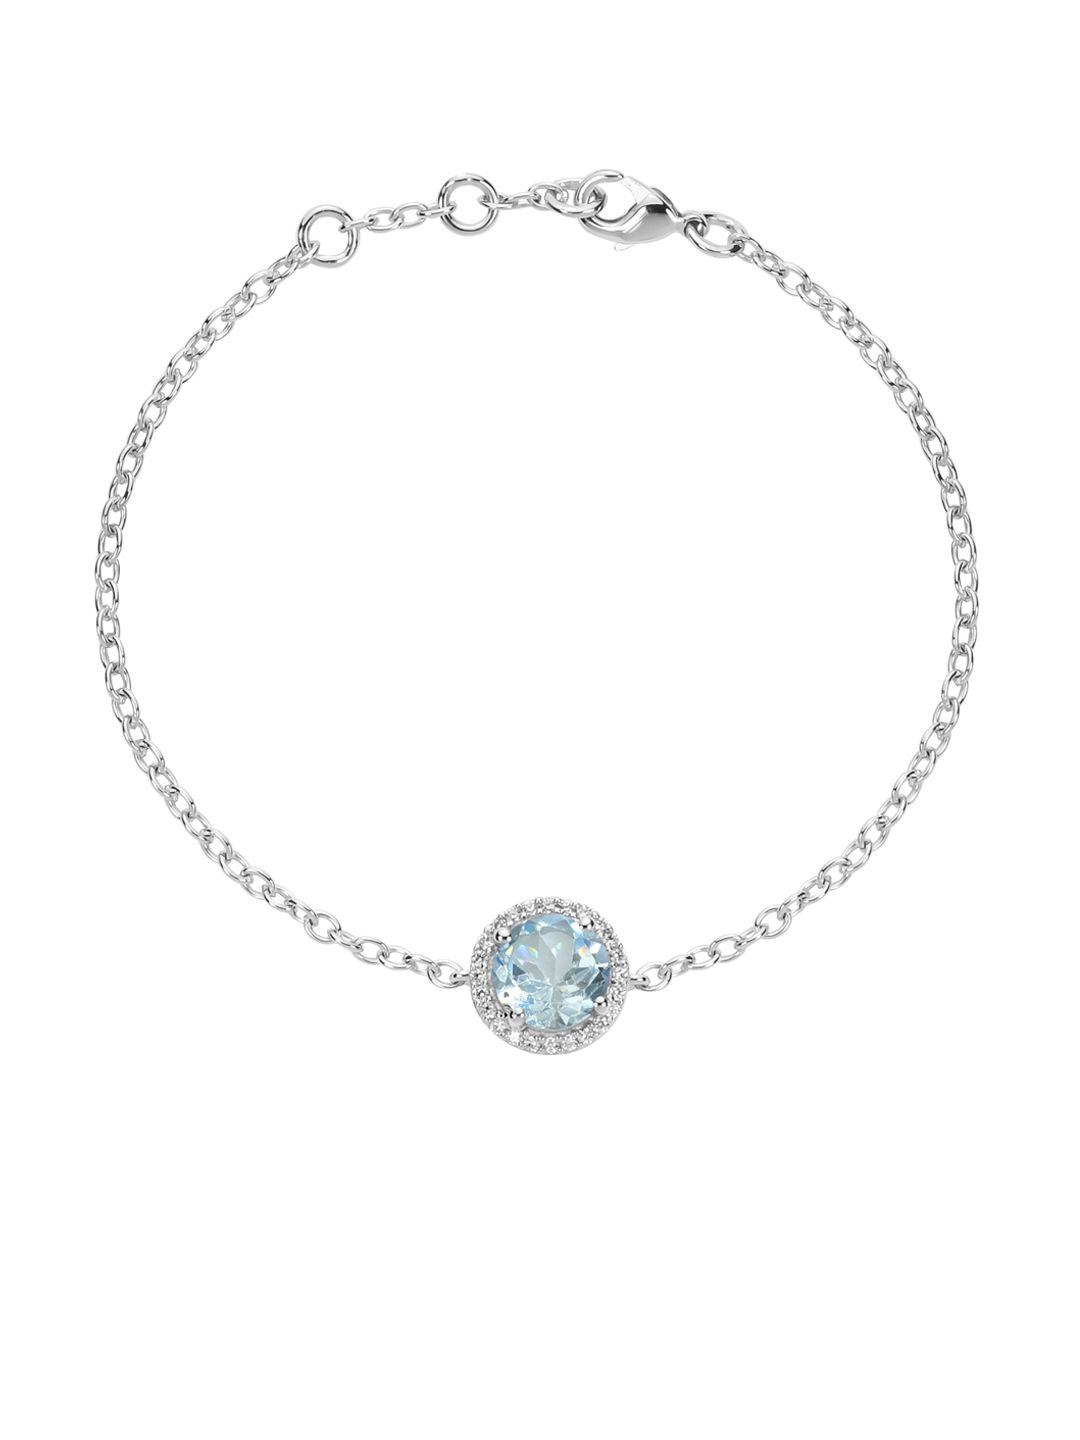 la soula 925 sterling silver blue aquamarine march birthstone studded bracelet rakhi